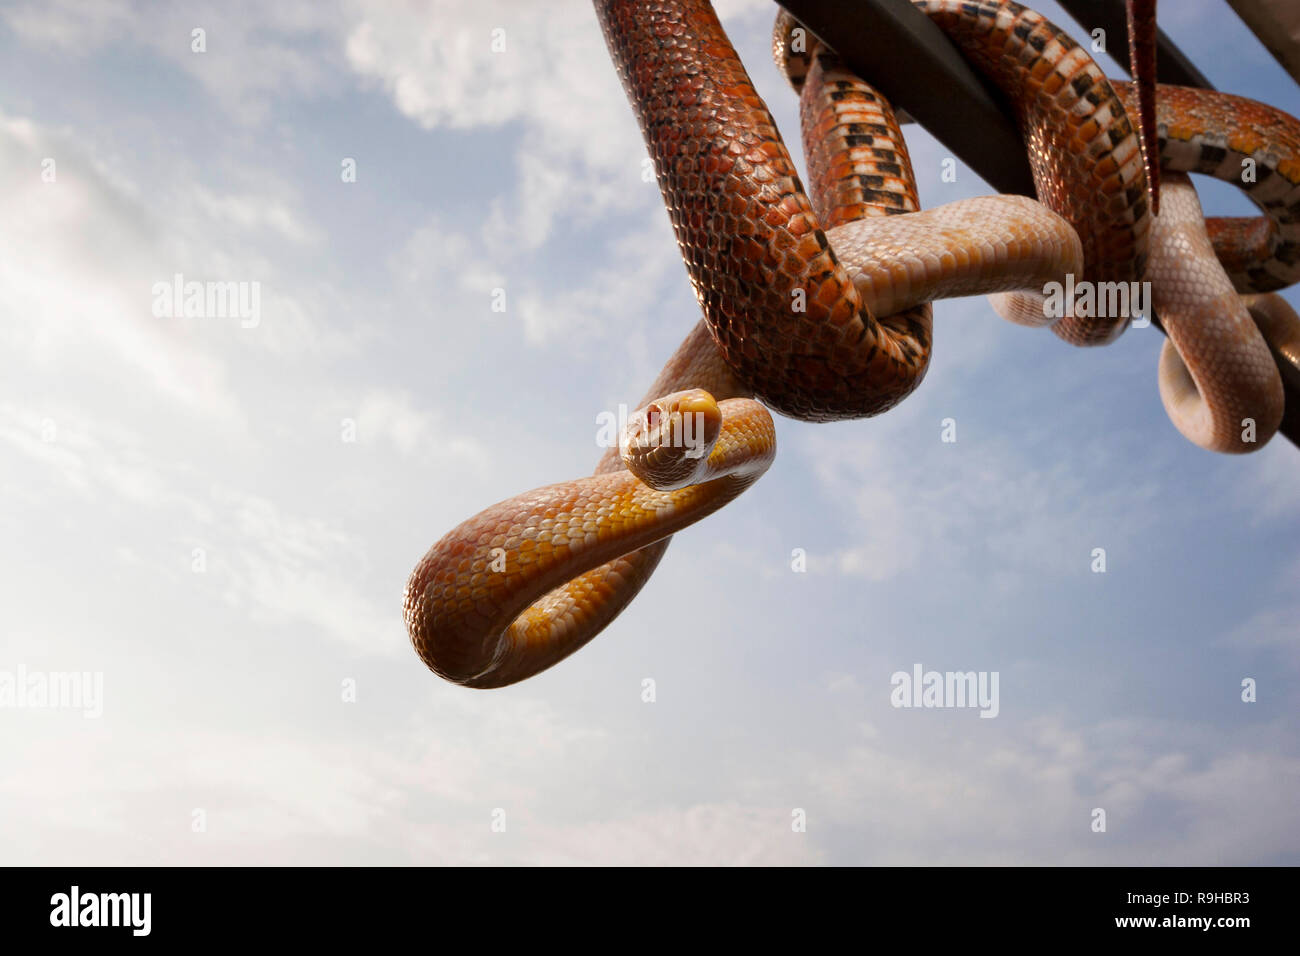 Corn snakes (Pantherophis guttatus) on a sky background Stock Photo